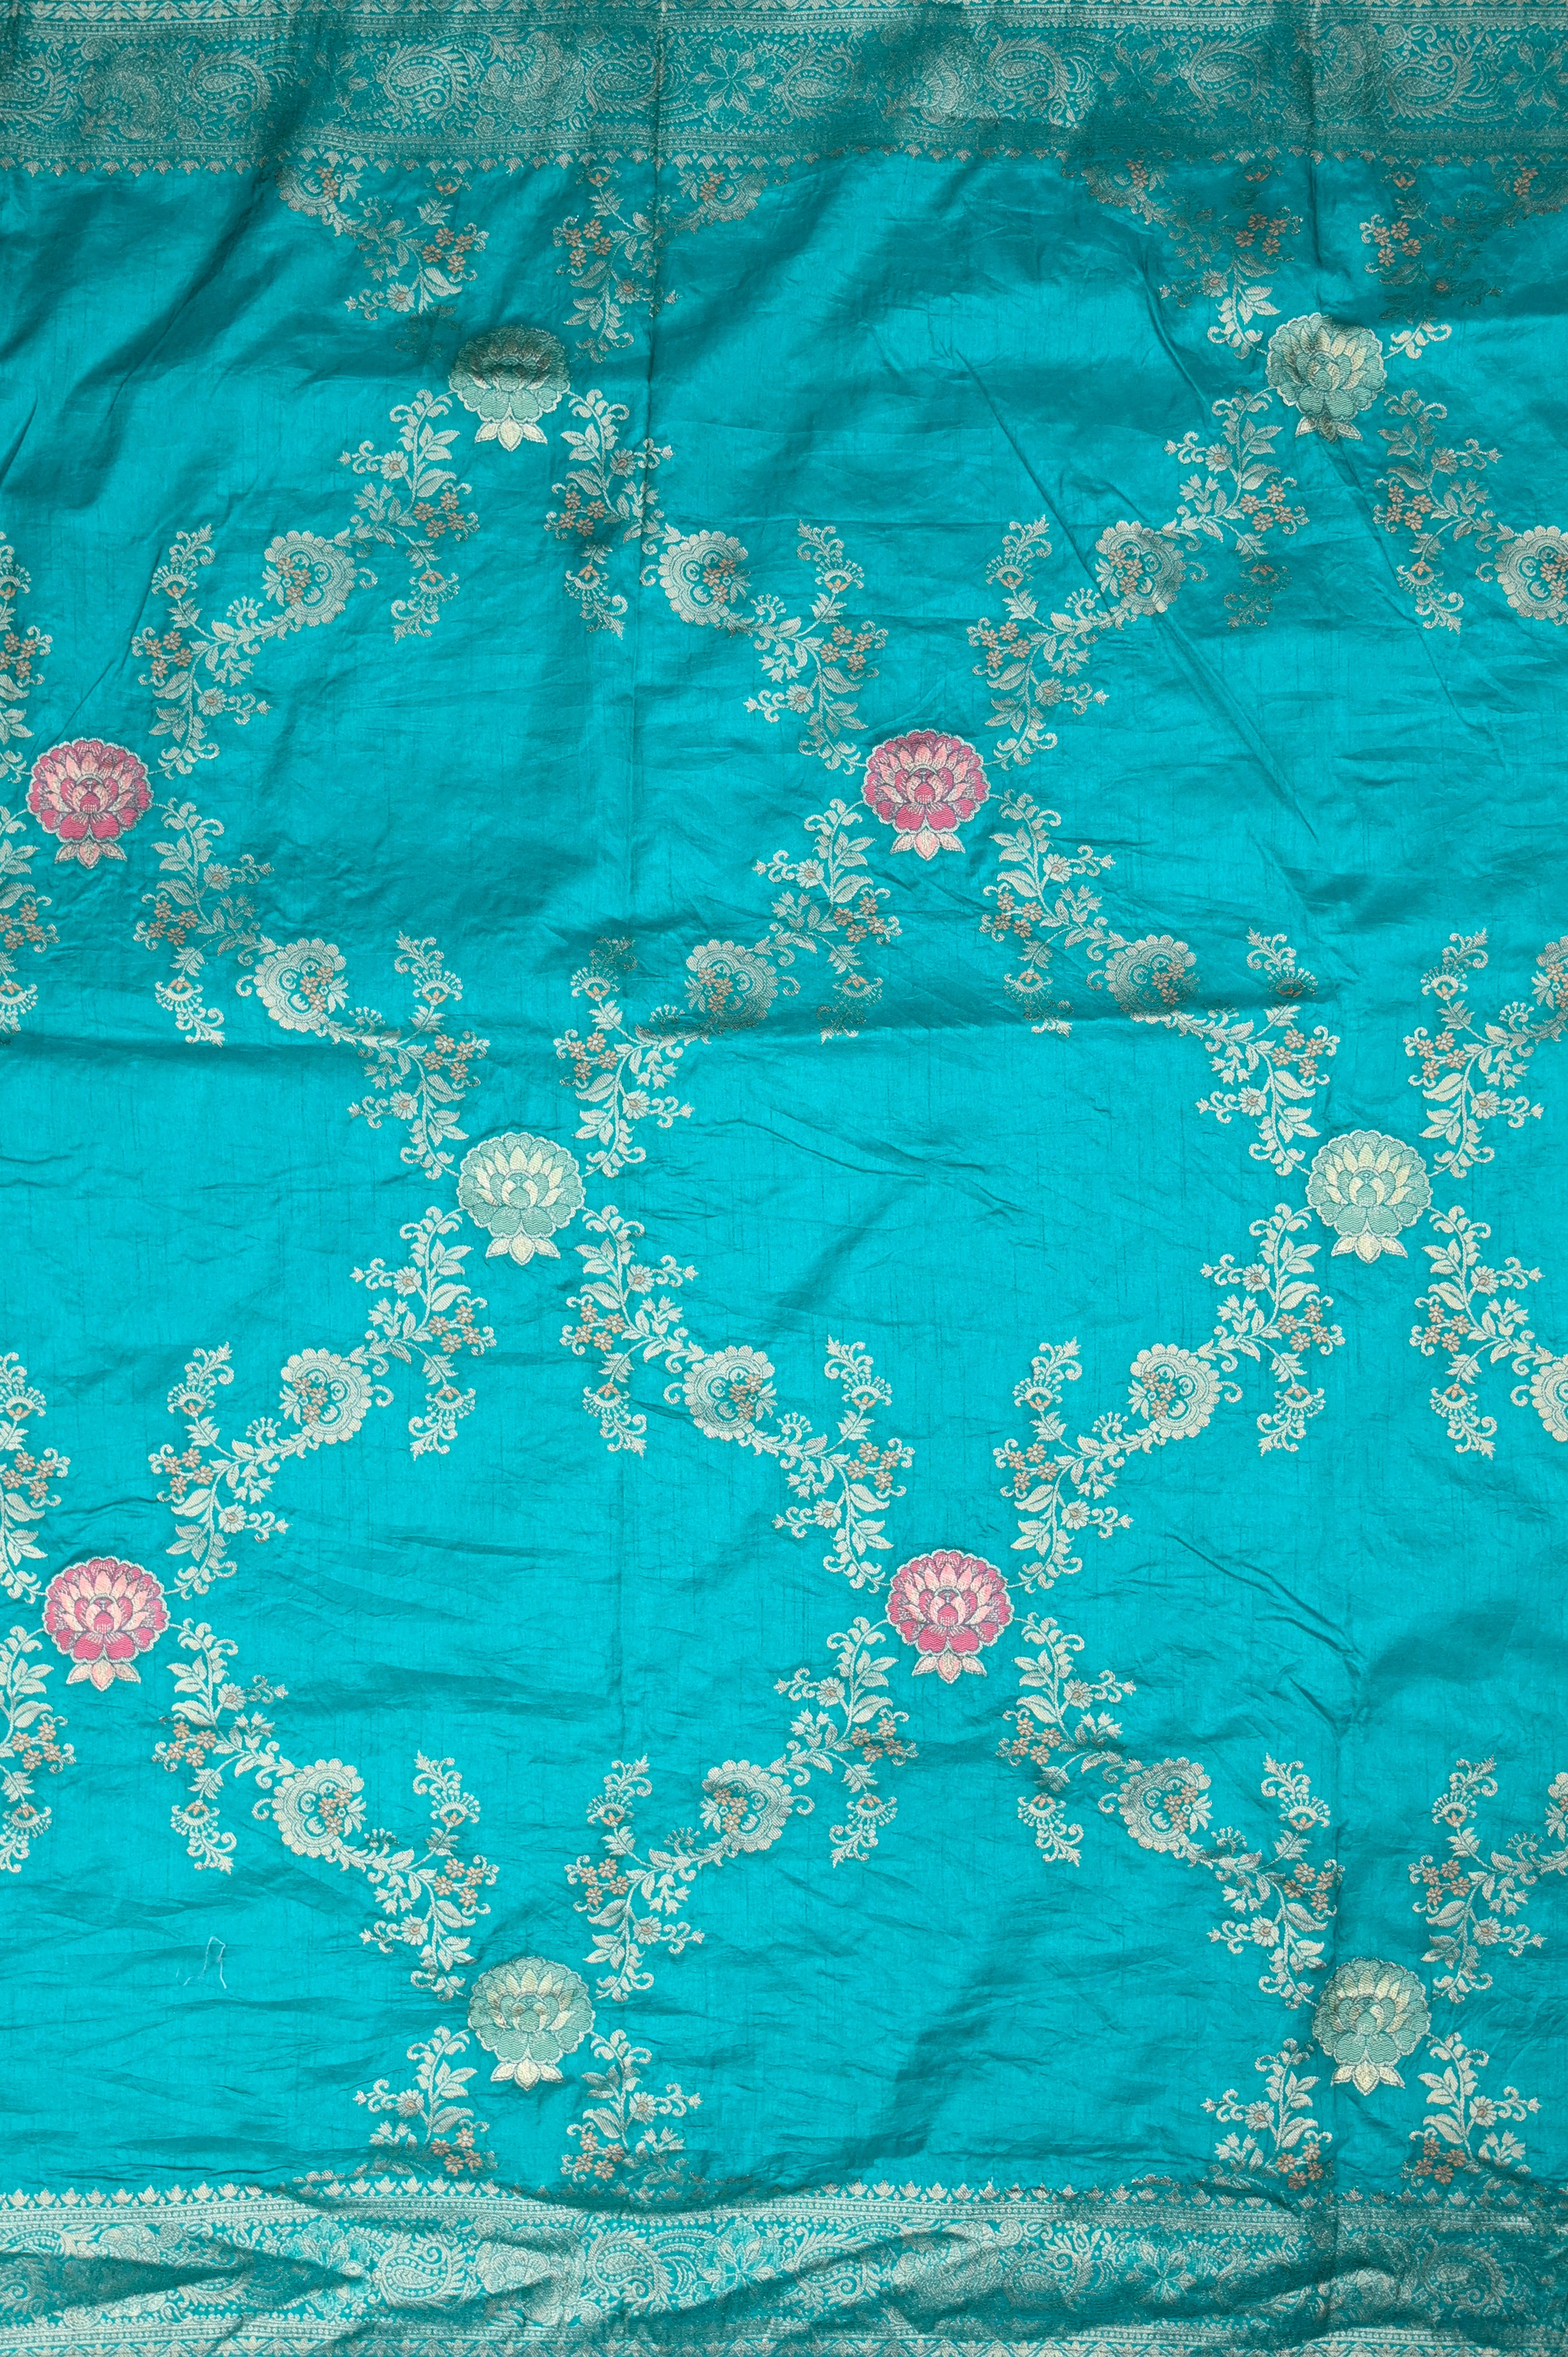 Dola silk saree sea blue color with allover meenakari work, rich pallu, small zari border and running plain blouse.